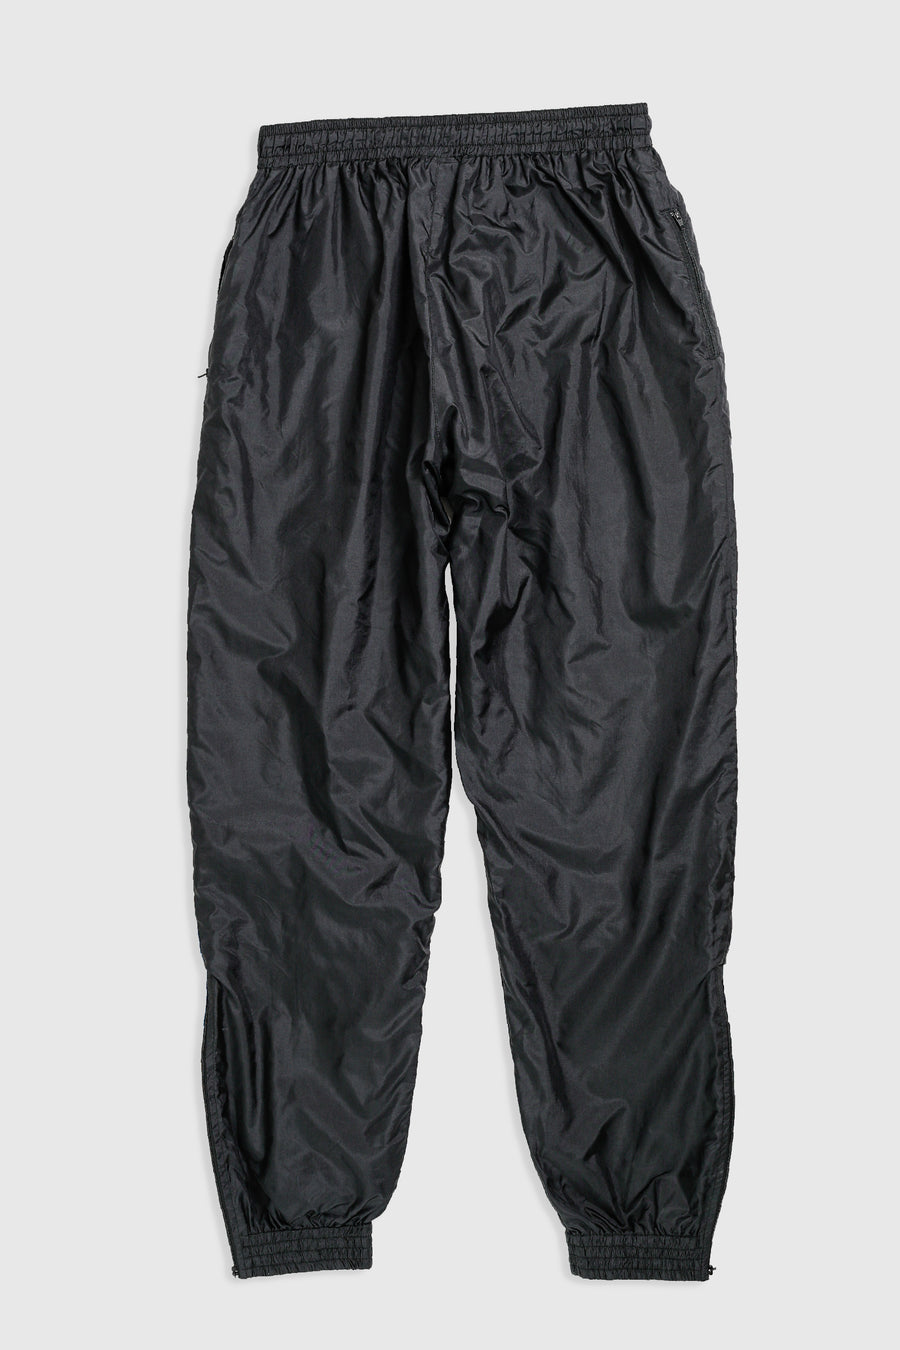 Vintage Umbro Windbreaker Pants - XL (LAUNDRY)